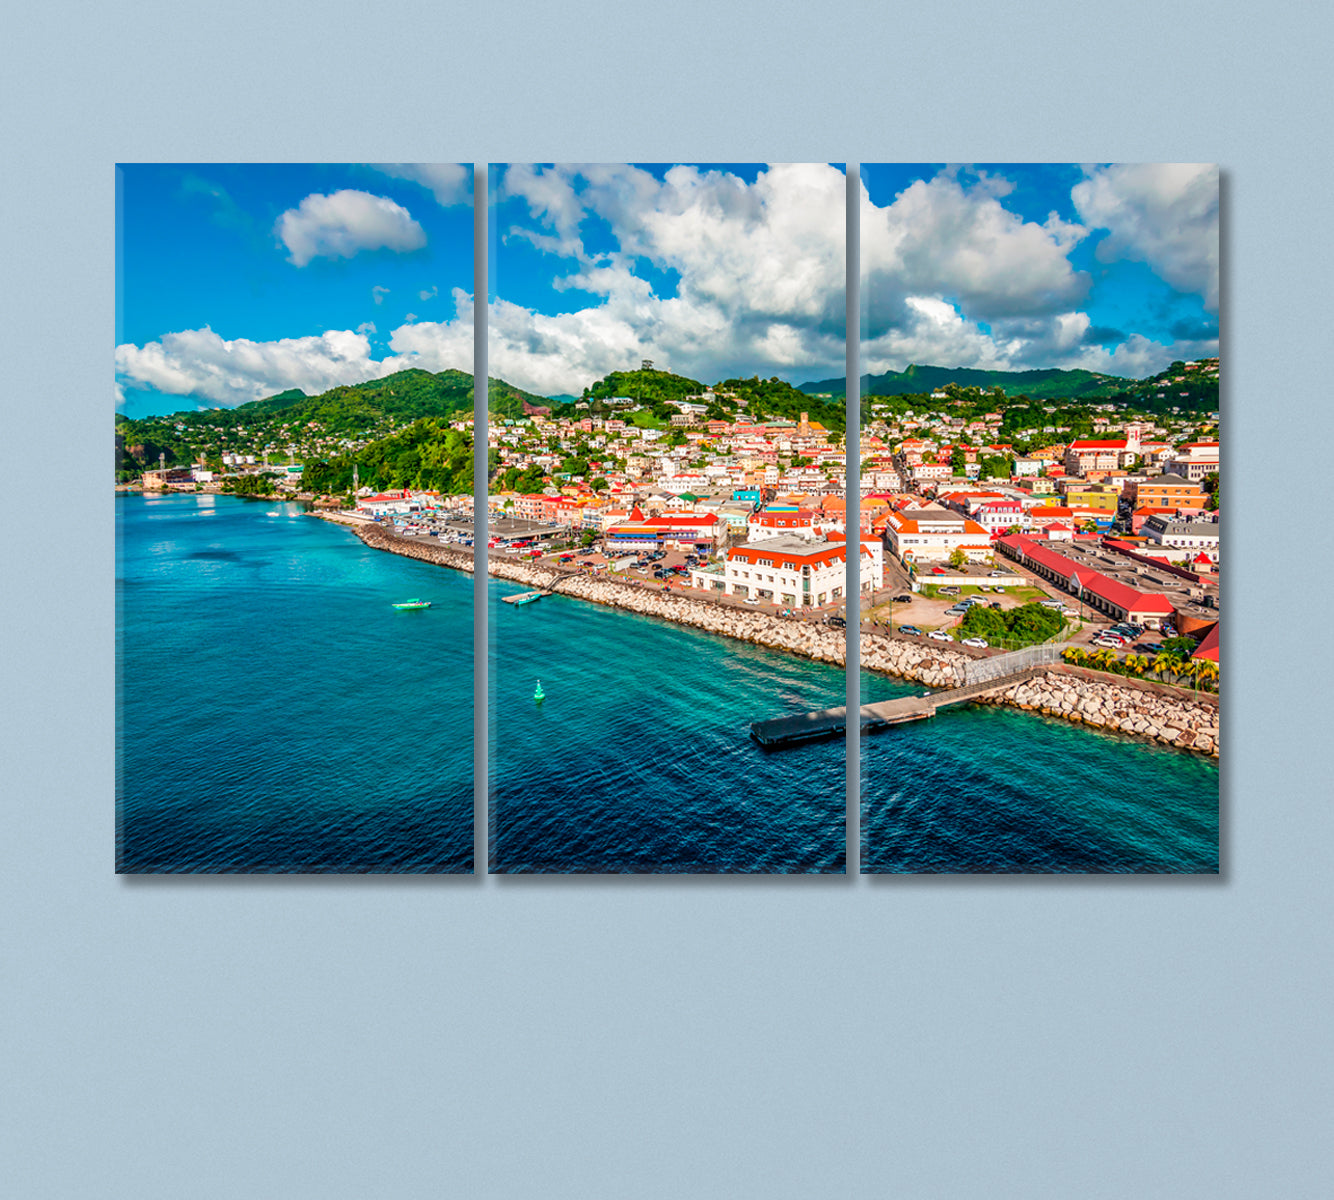 Coastal City Saint George's Grenada Caribbean Islands Canvas Print-Canvas Print-CetArt-3 Panels-36x24 inches-CetArt